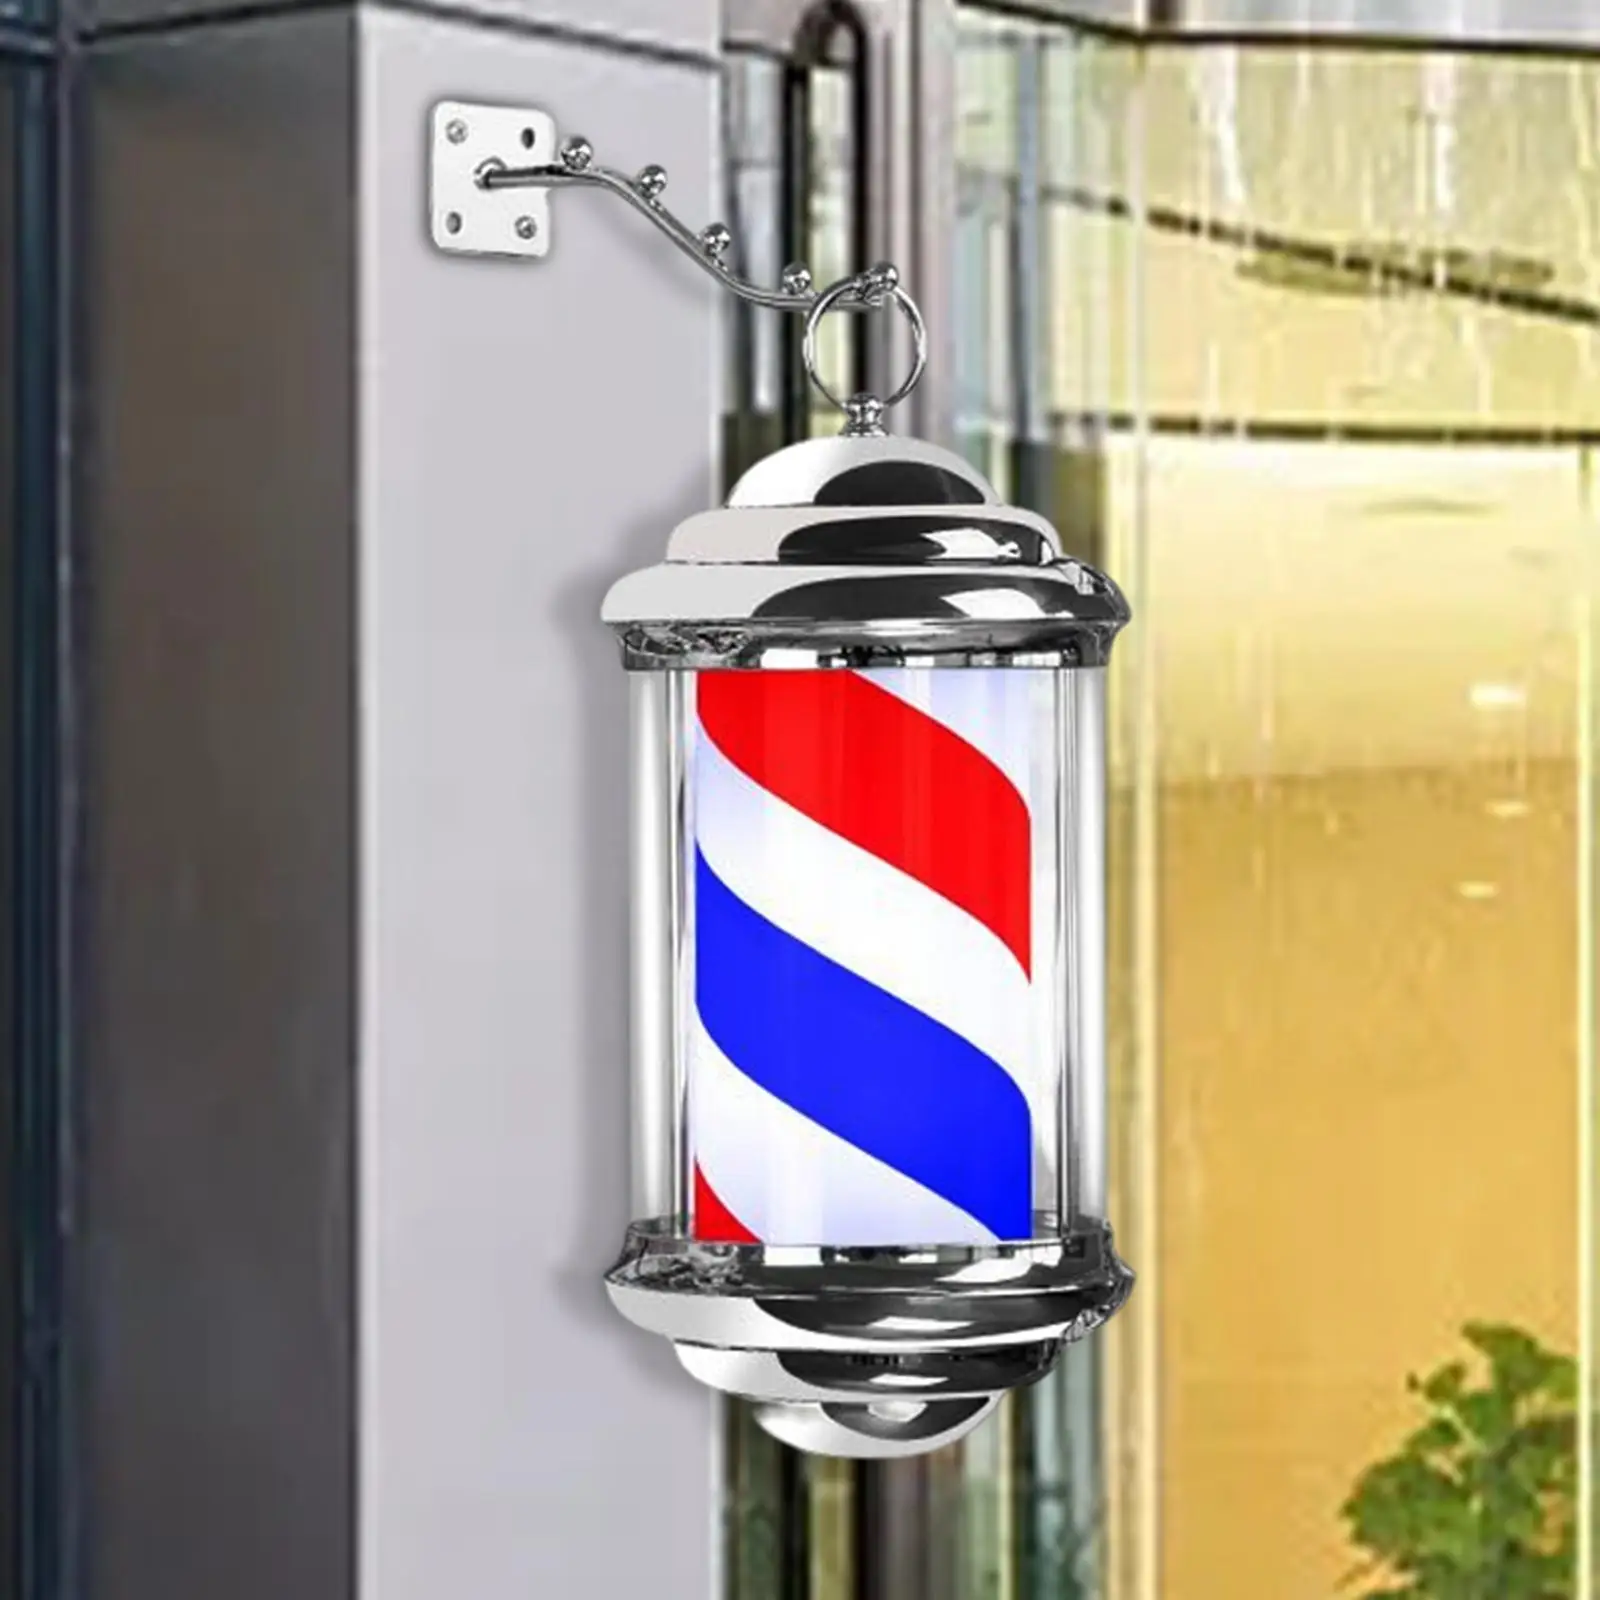 Barber Pole Light Rotating Hair Salon Shop Sign Stripe Windproof Water Resistant Rainproof LED Light for Entrance Indoor